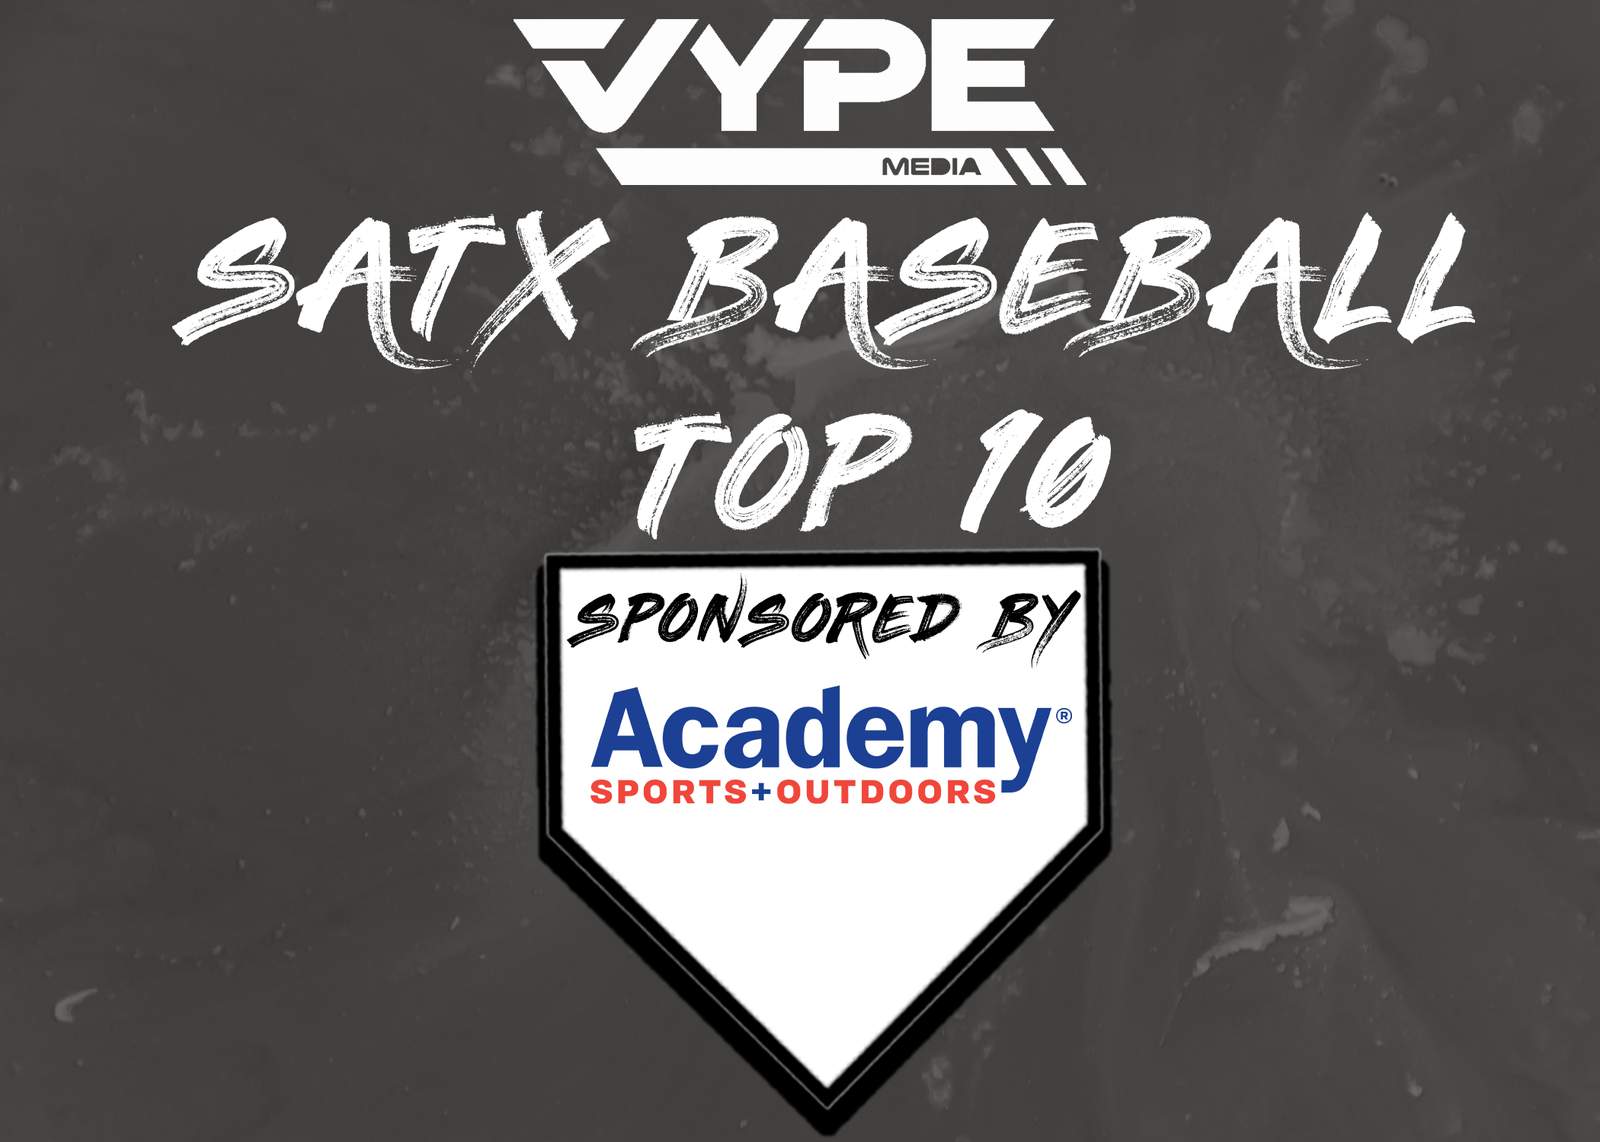 VYPE San Antonio Baseball Rankings: Week of 4/12/21 presented by Academy Sports + Outdoors